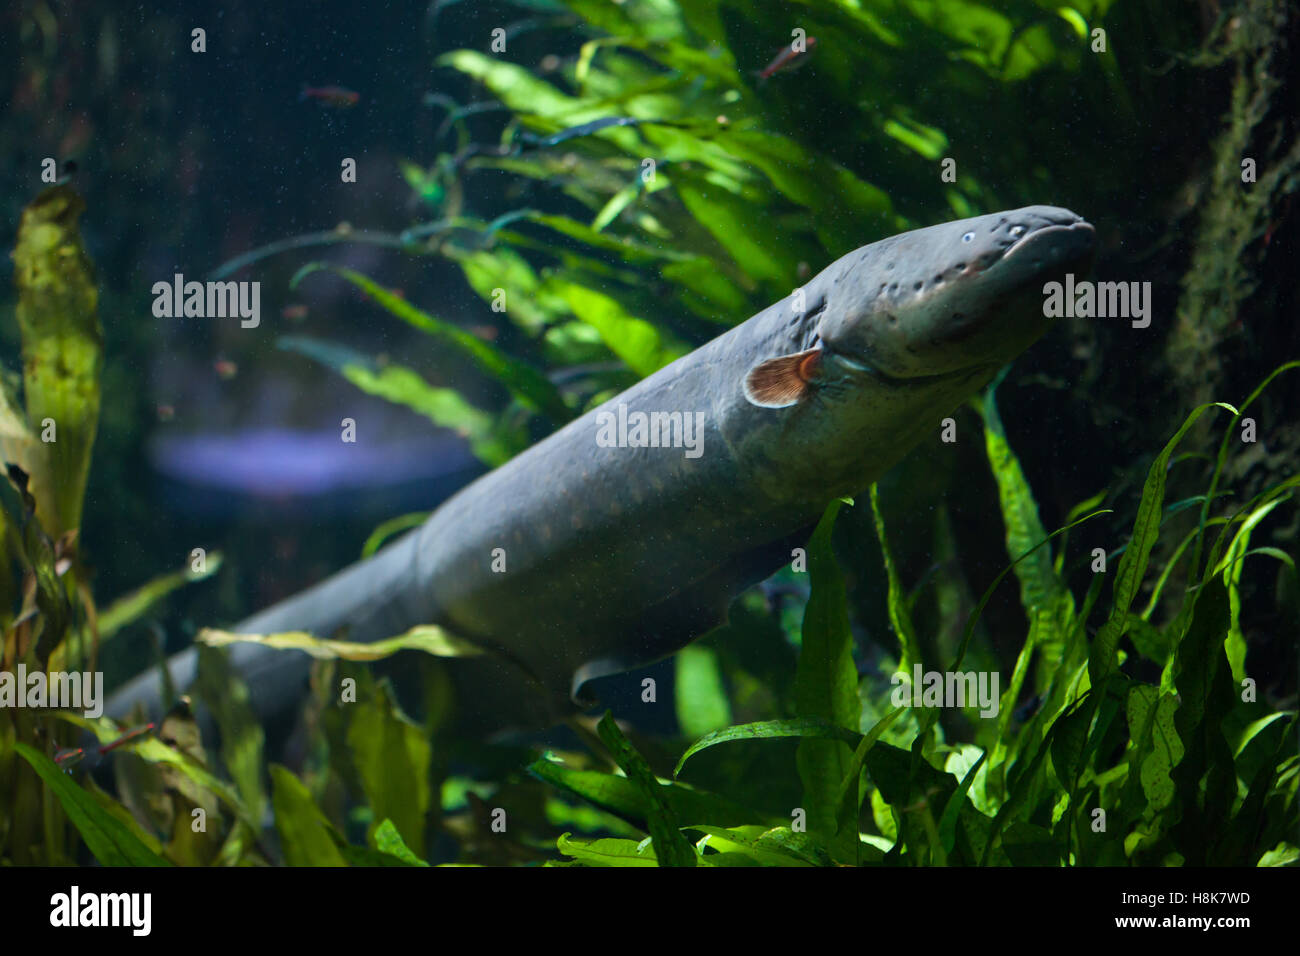 Electric eel (Electrophorus electricus). Freshwater fish. Stock Photo